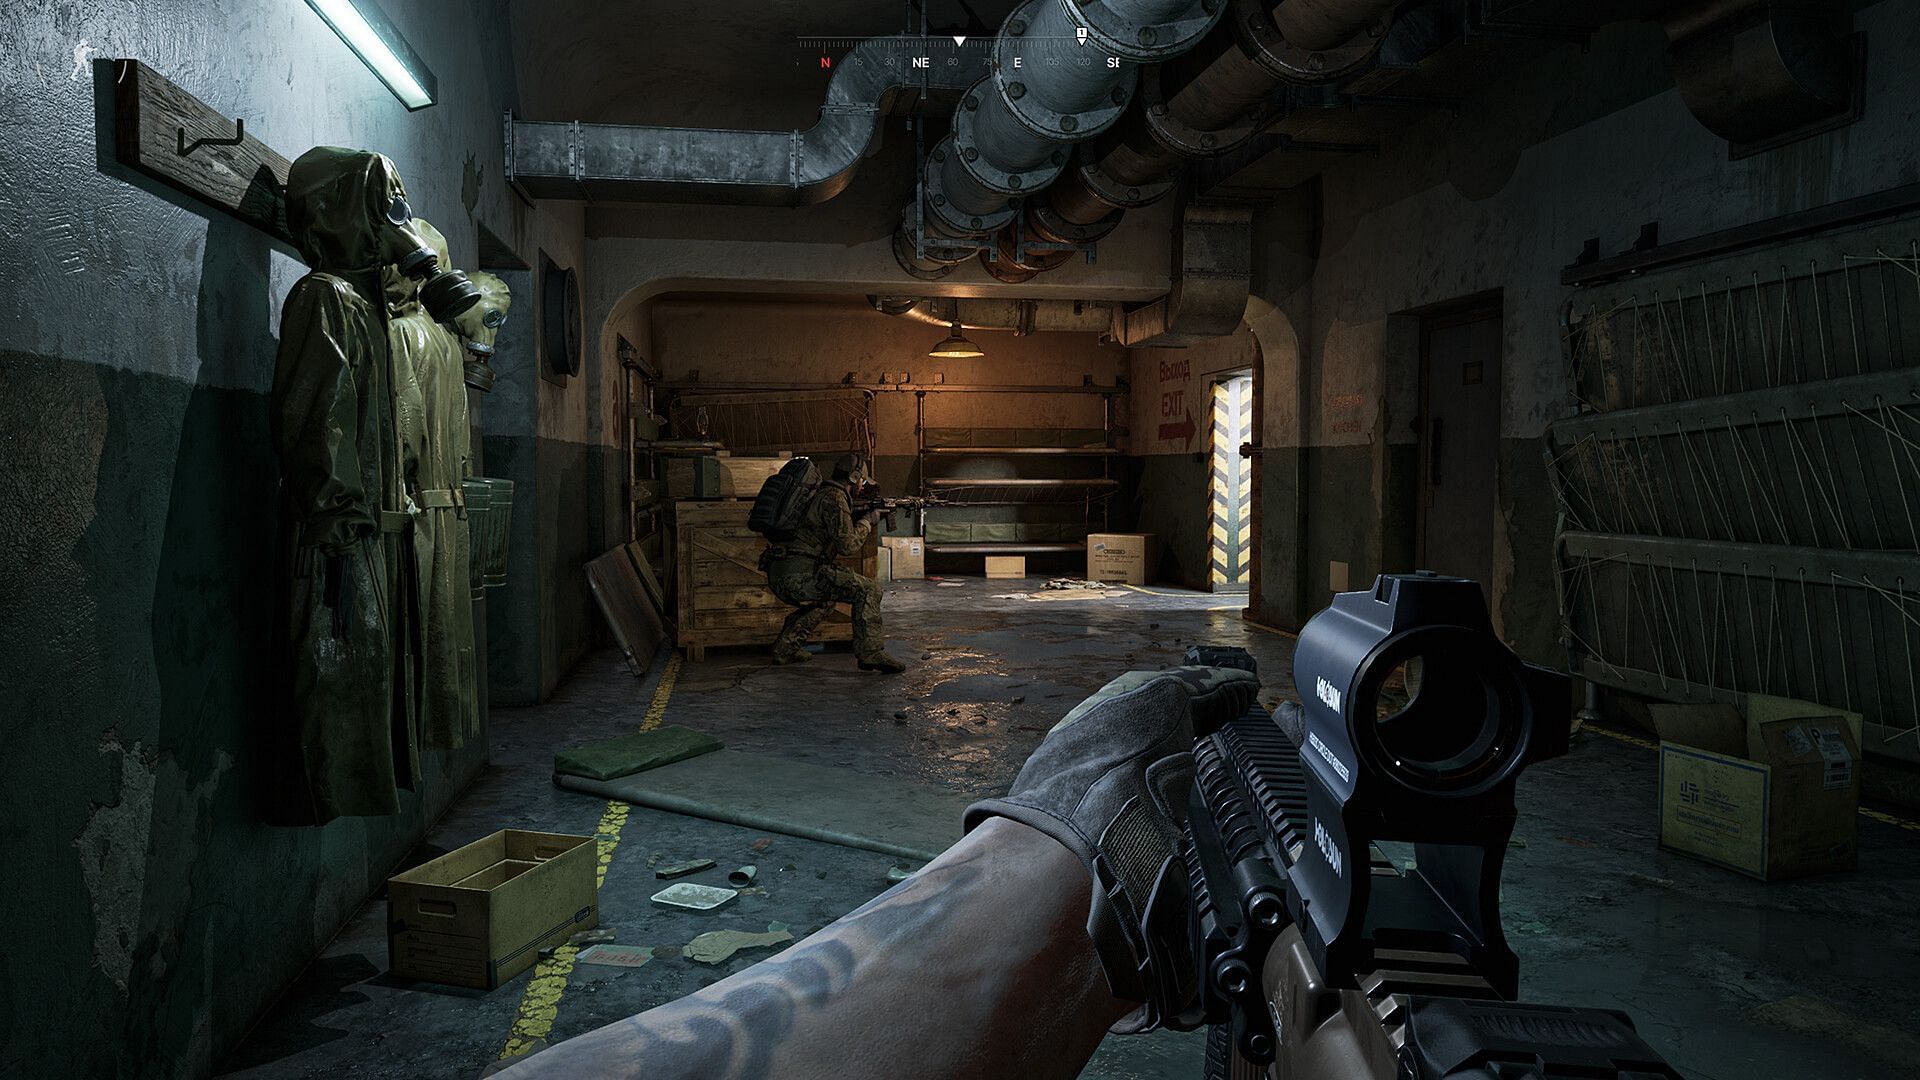 An Operator inside a dark room holding a weapon in Gray Zone Warfare